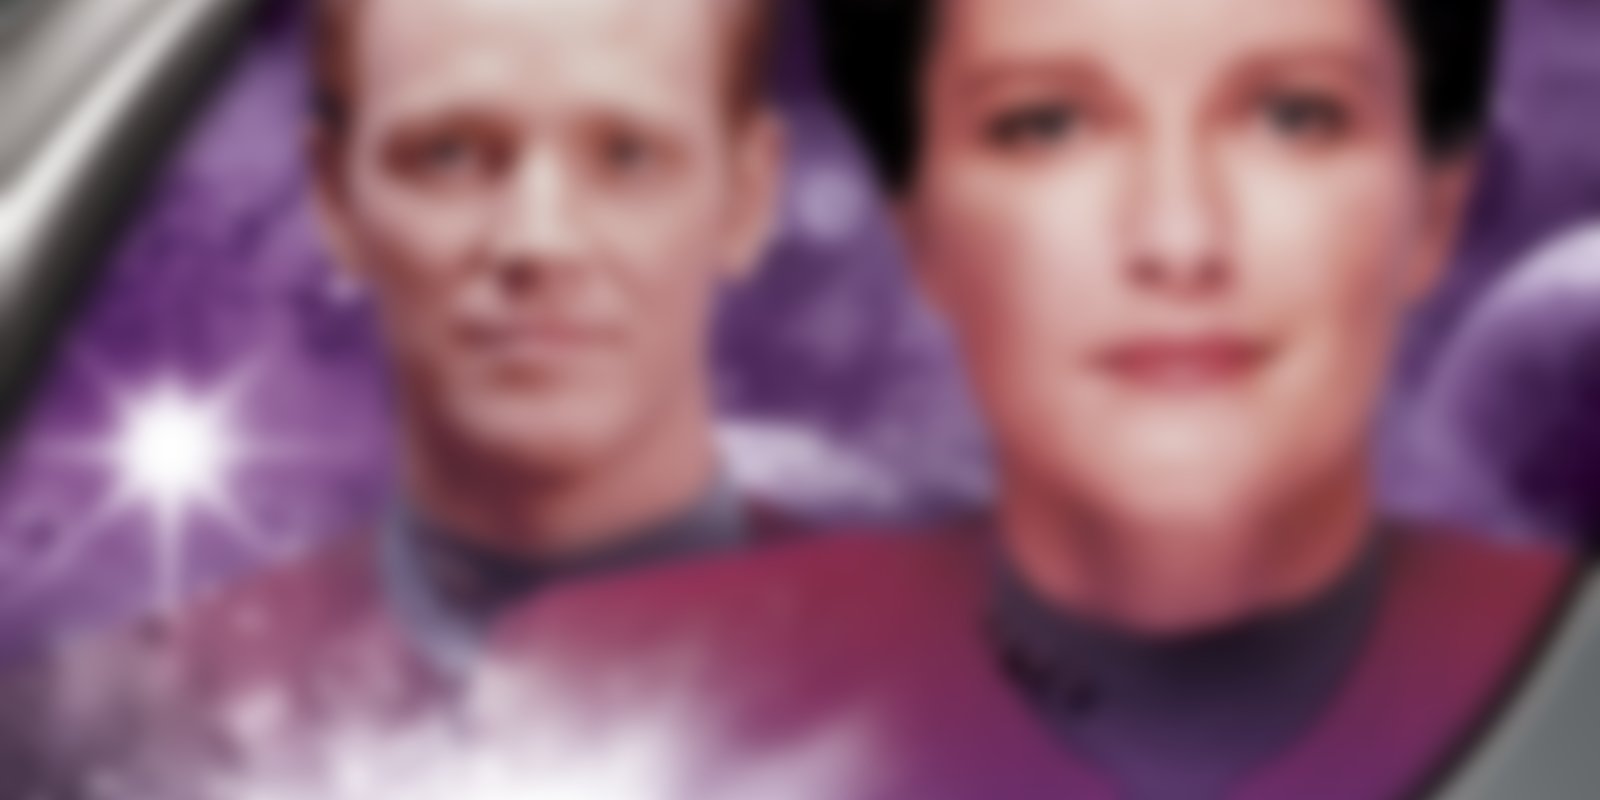 Star Trek: Voyager - Staffel 6